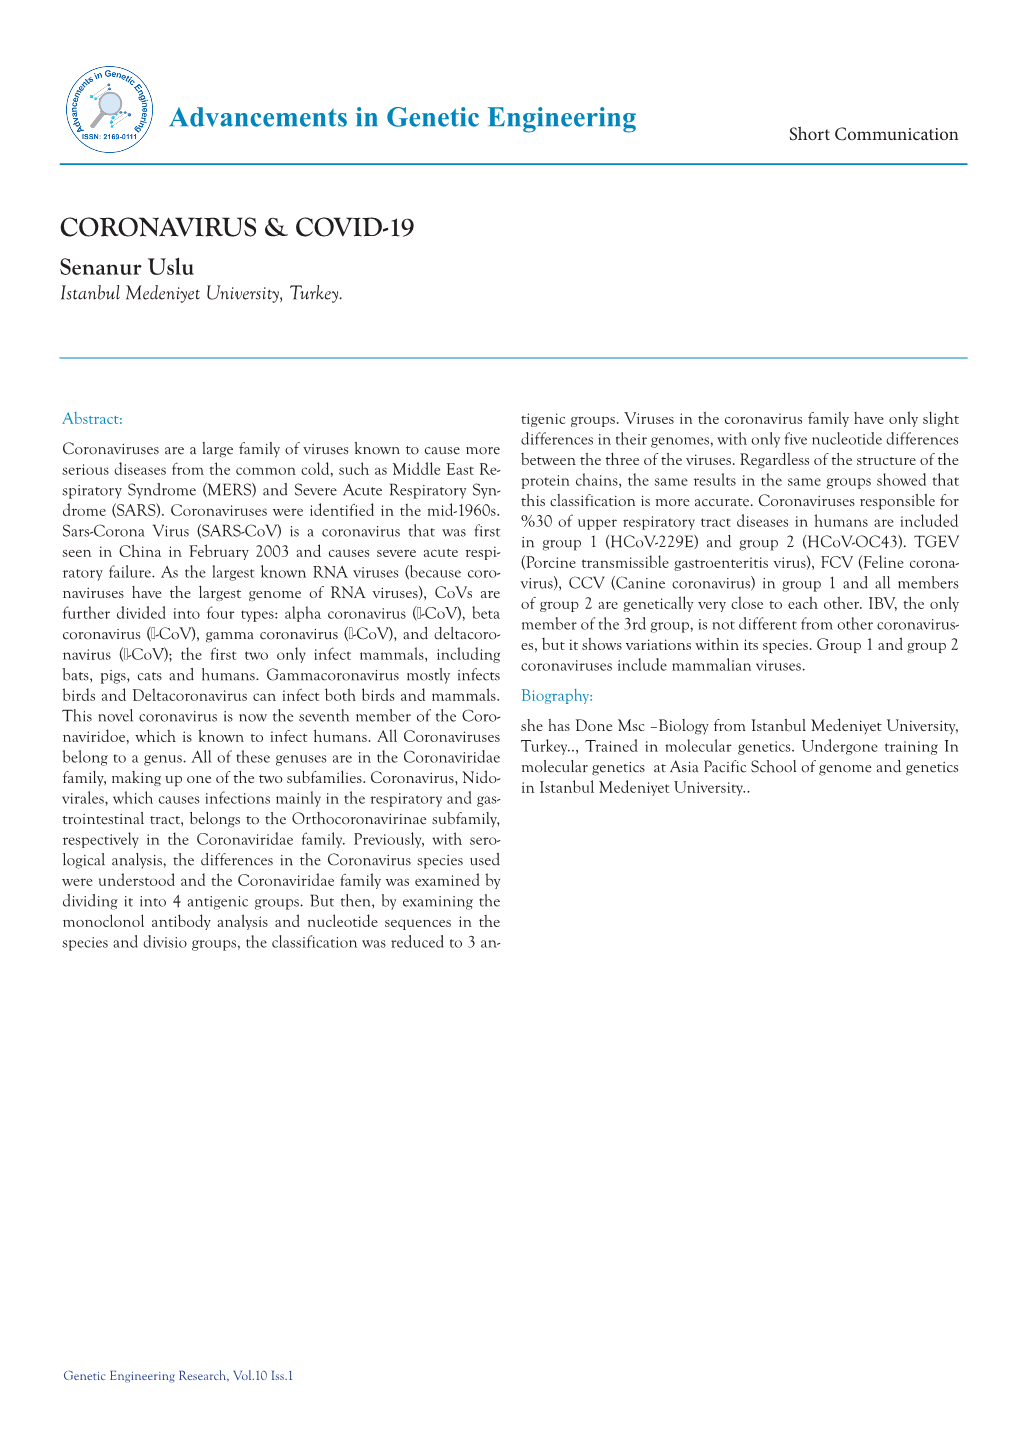 Coronavirus & Covid-19